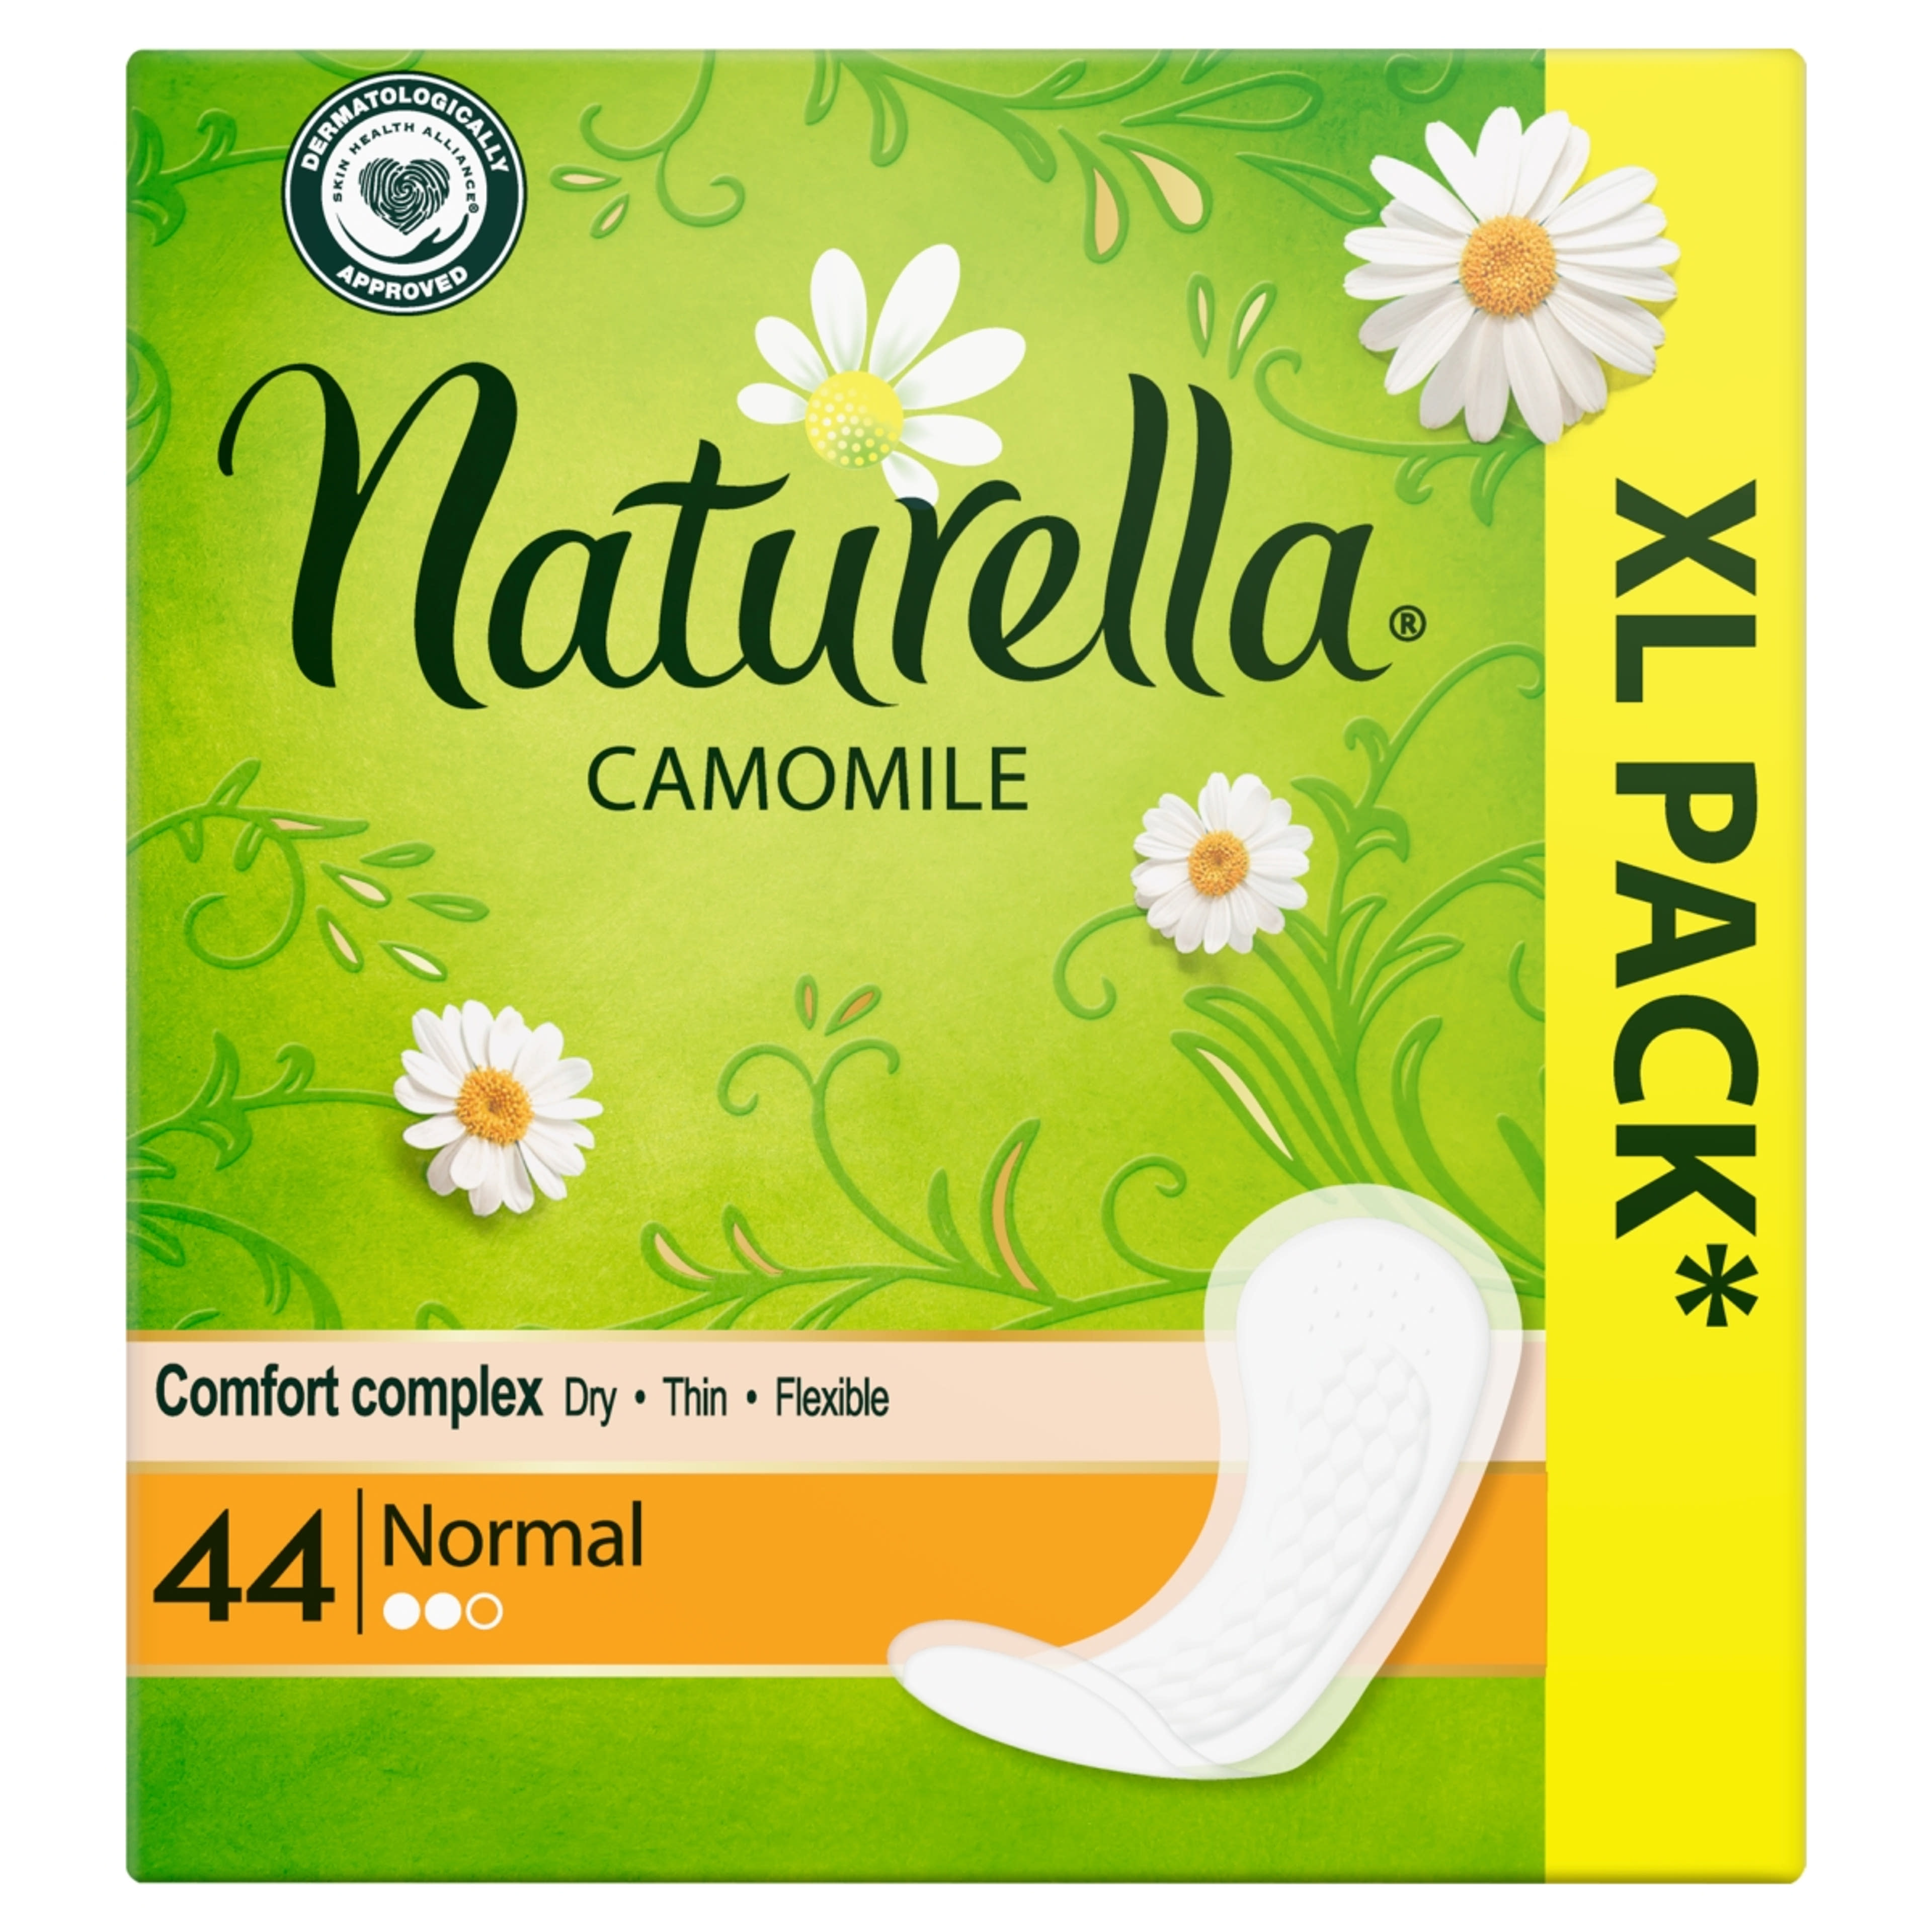 Naturella tisztasági betét regular chamomile - 44 db-1